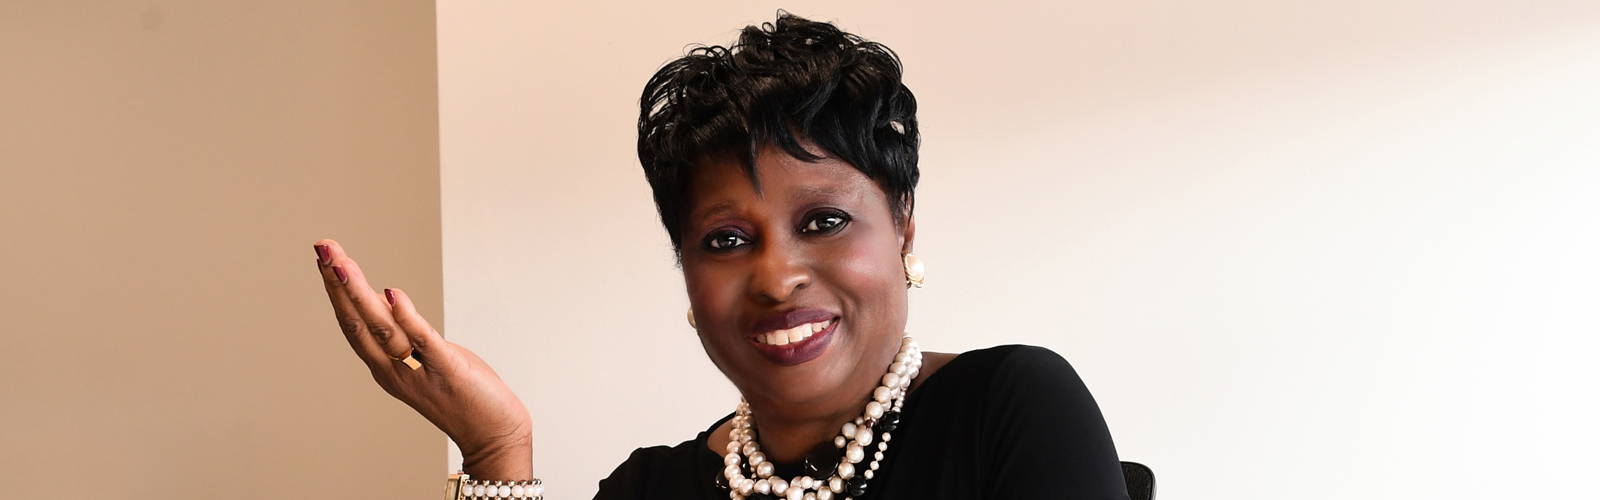 Jennifer Parker, president and owner of Jackson Parker Communications and Black Capital Network